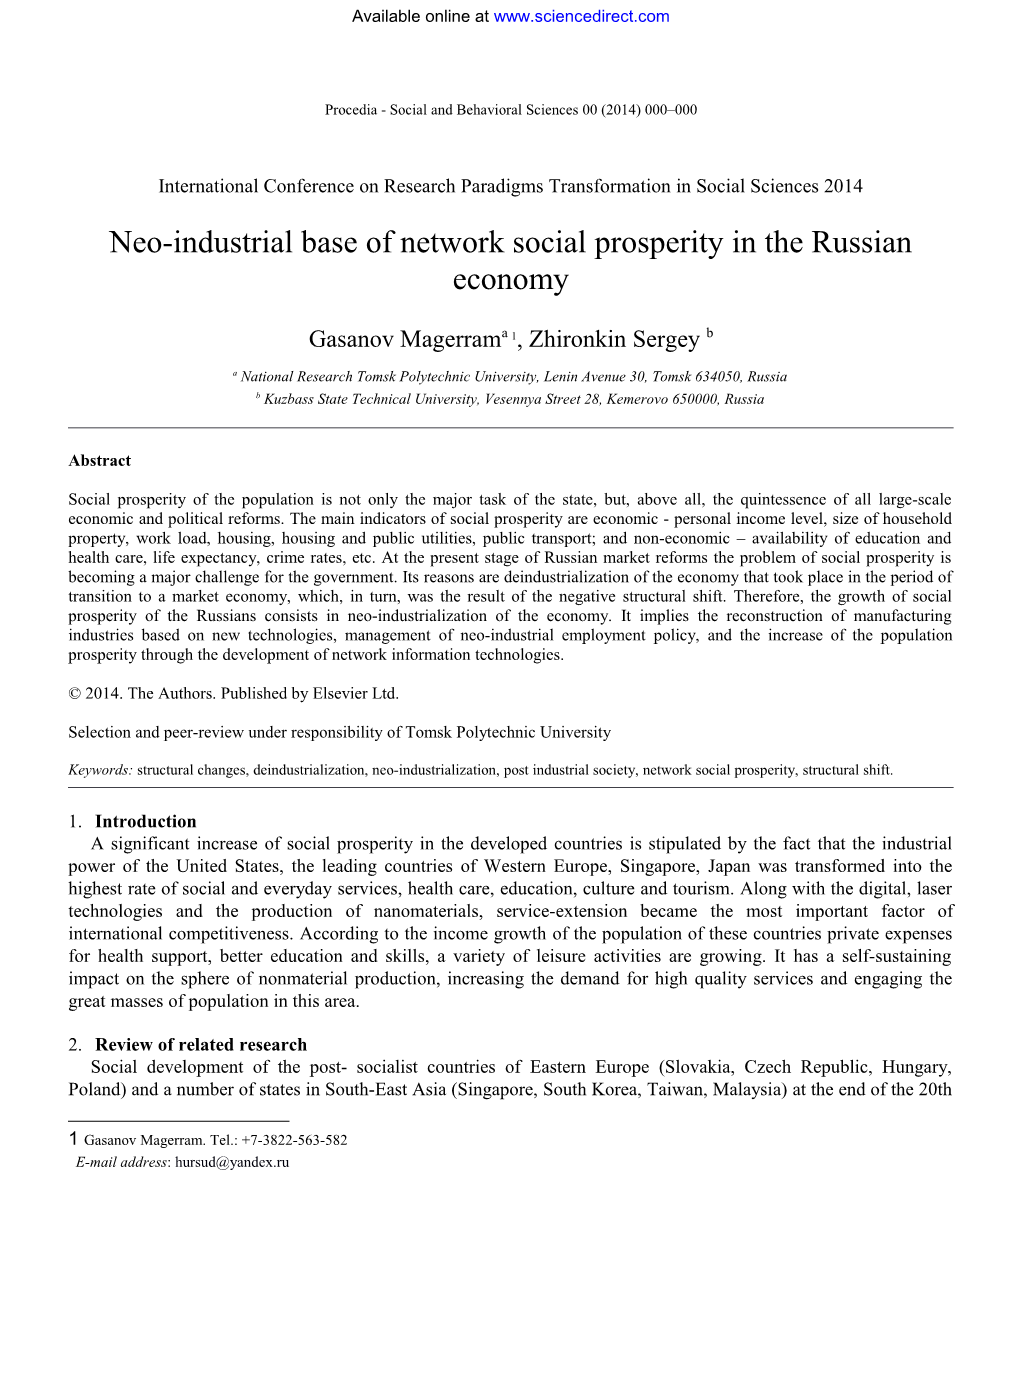 Gasanov Maherram, Zhironkin Sergey / Procedia - Social and Behavioral Sciences 00 (2018)